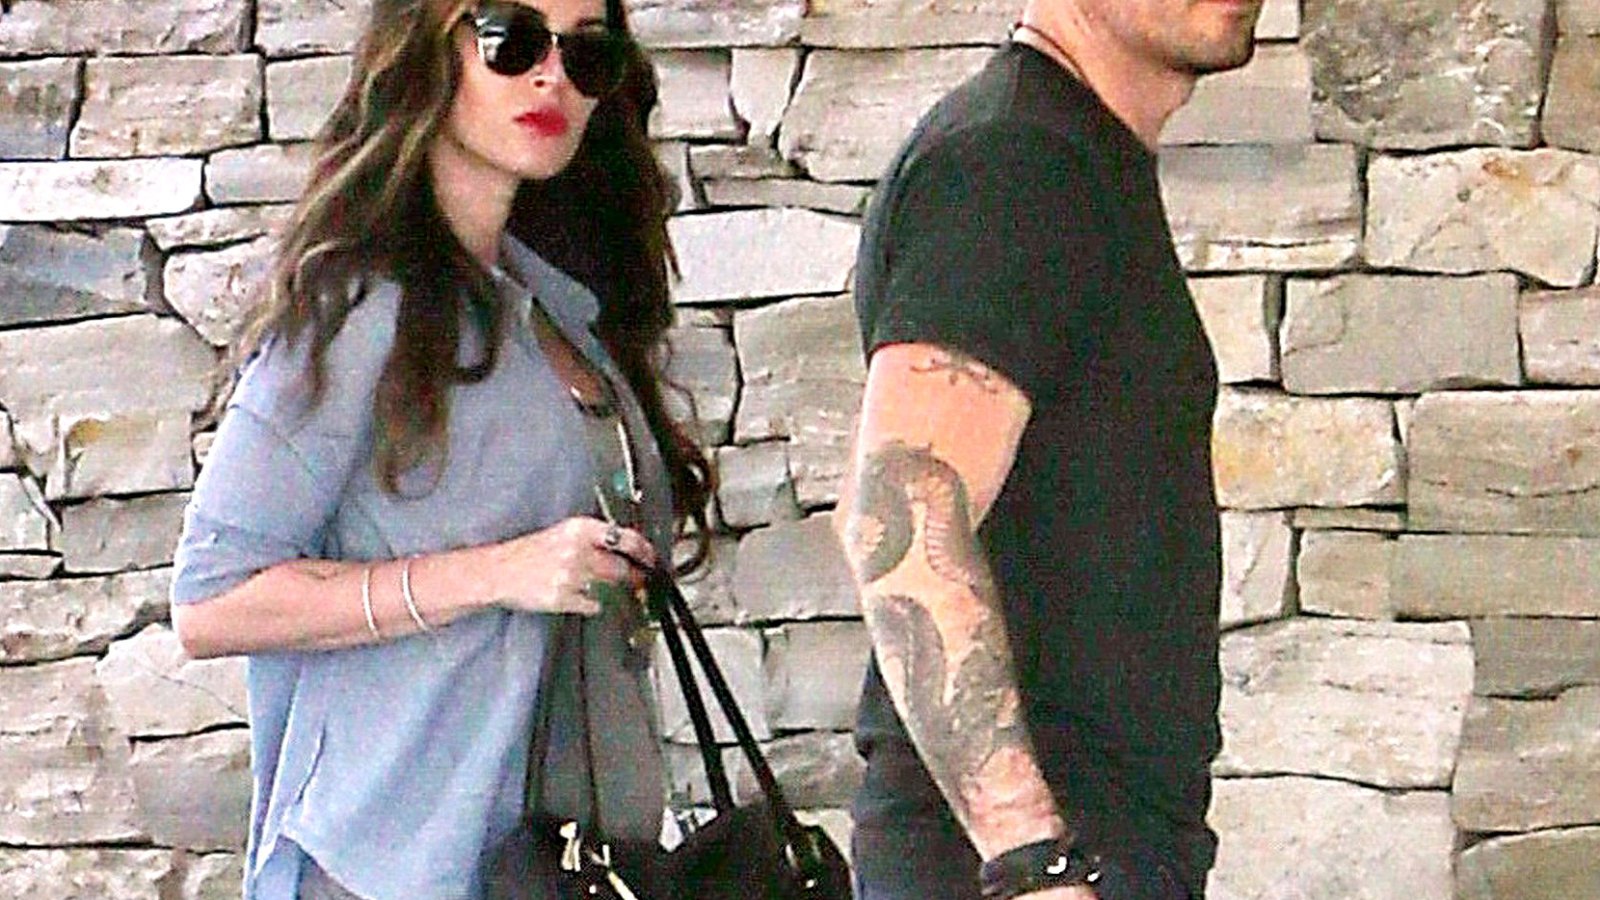 Megan Fox and husband Brian Austin Green out on Nov 13, 2013